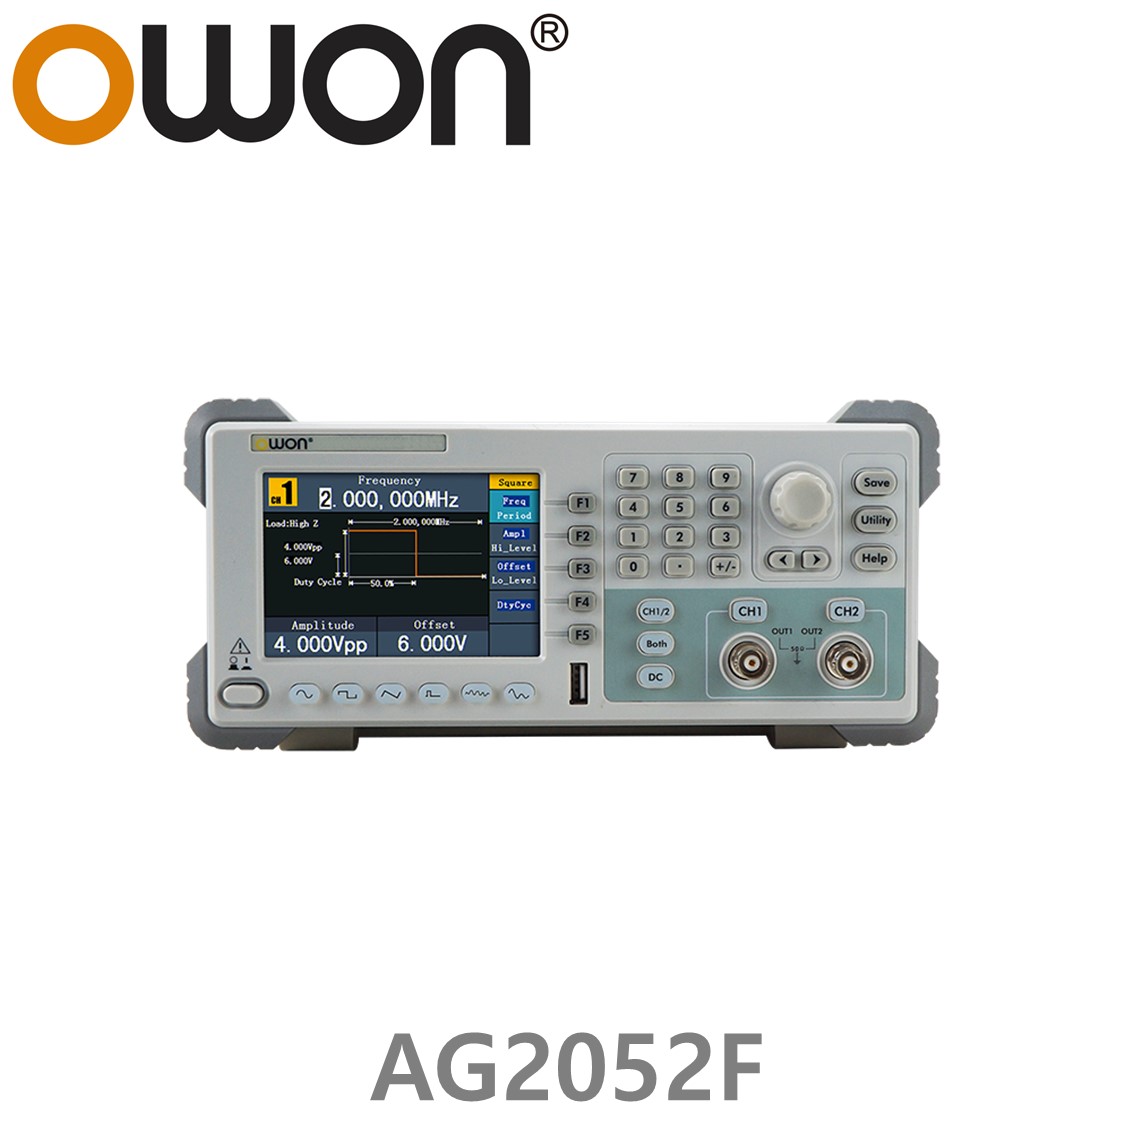 [ OWON ] AG2052F 임의 파형발생기 2CH, 50MHz, 250MS/s, 주파수카운터포함 포괄적 변조, AM, FM, PM, FSK